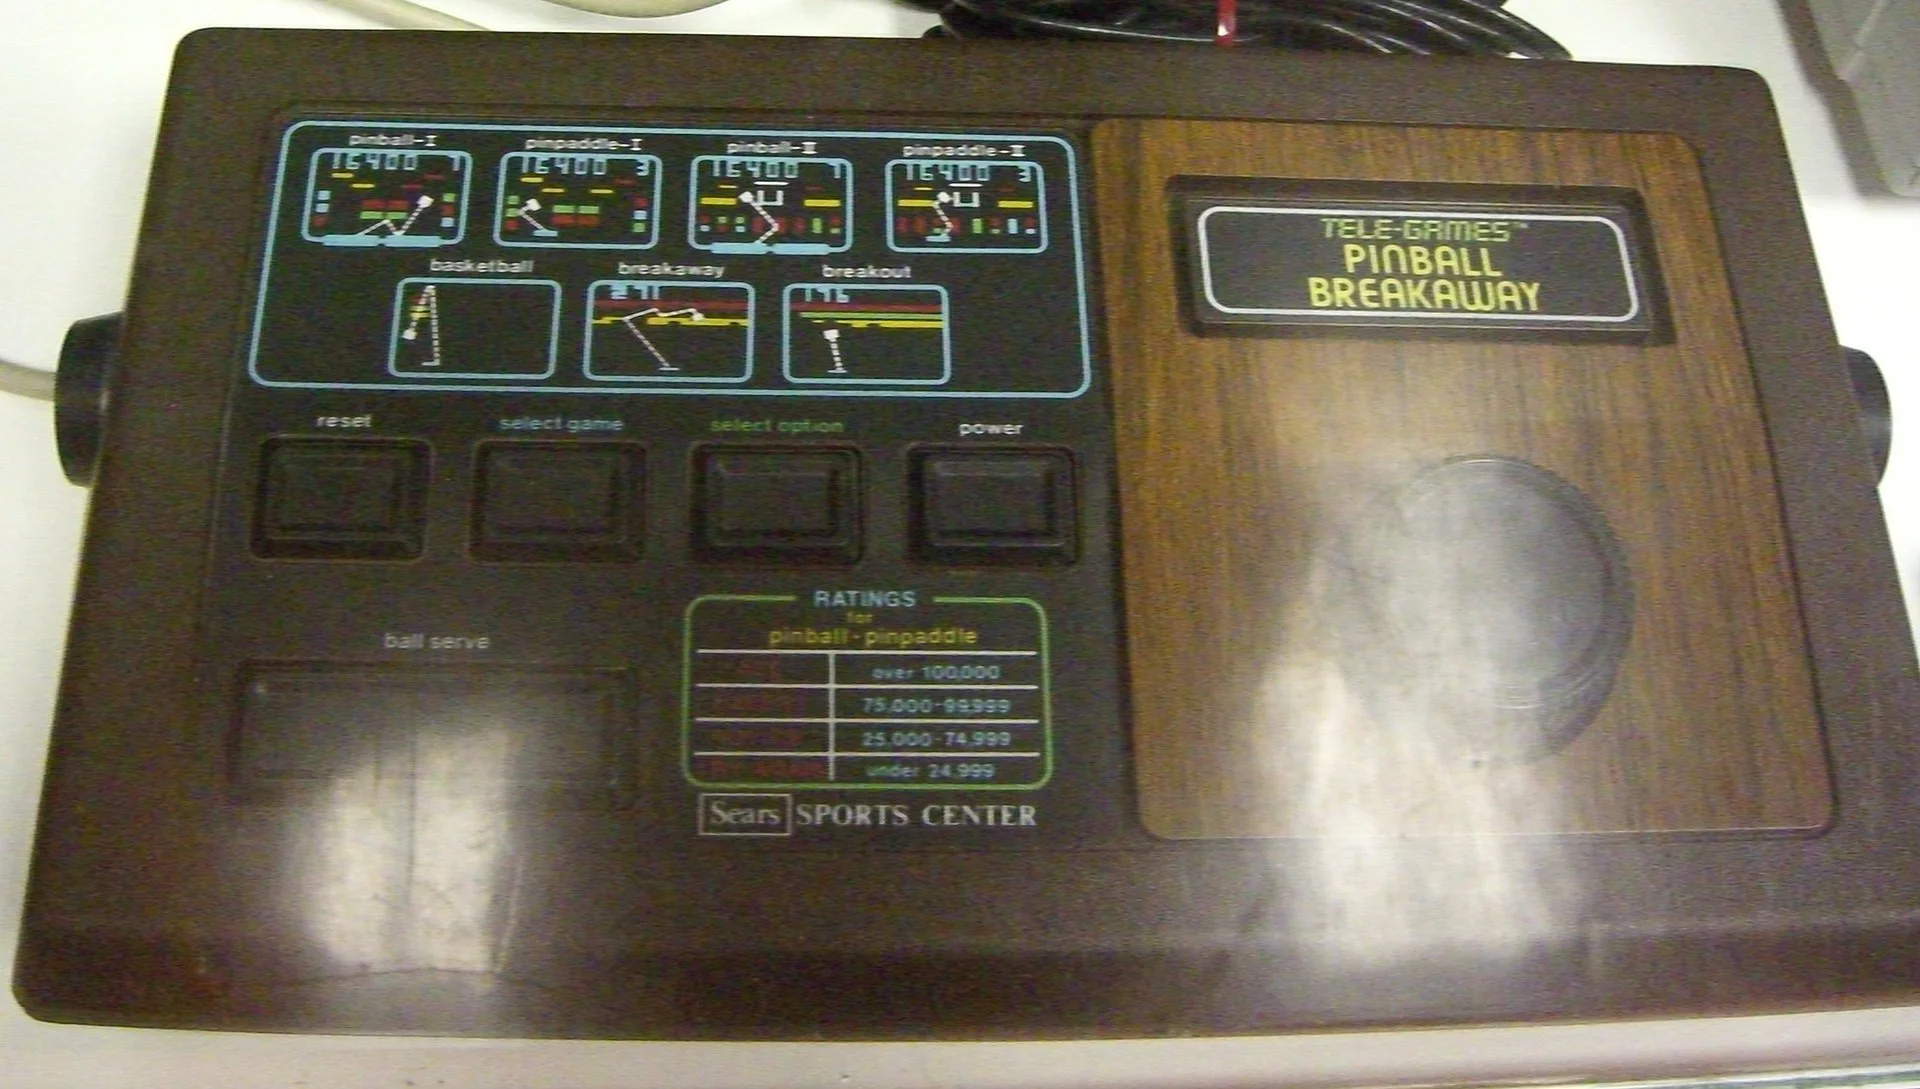 Sears C-380 Tele-Games Pinball Breakaway Console